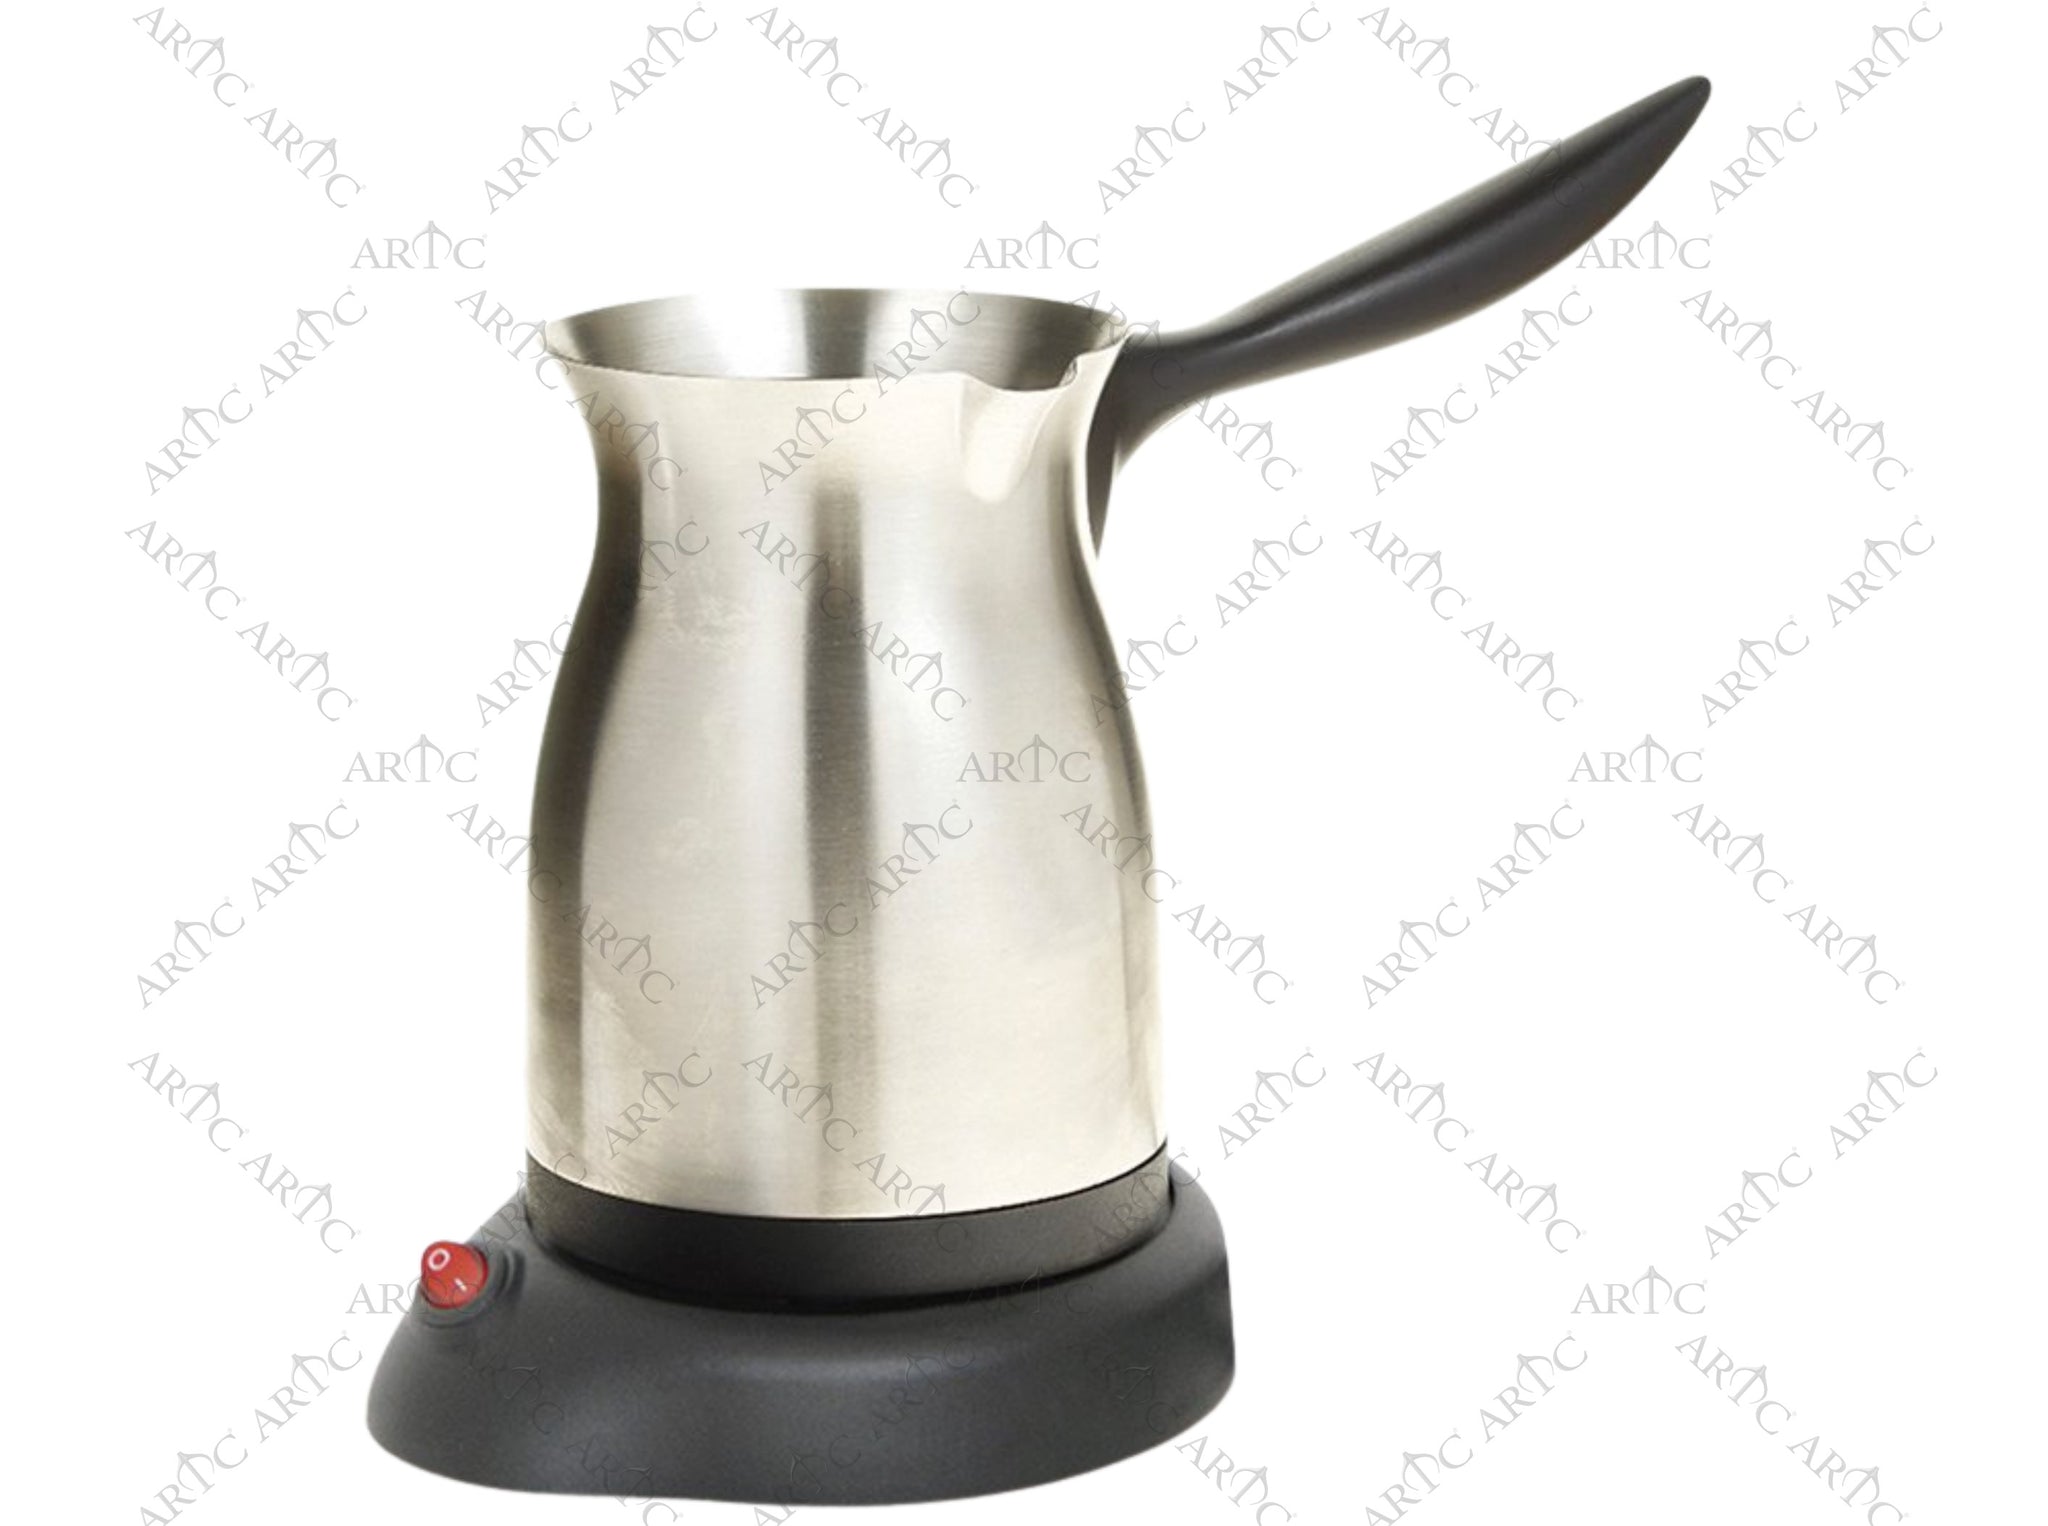 Saki Automatic Electric Turkish Coffee Maker with Cook Sense Technology,  White, 1 Piece - Harris Teeter